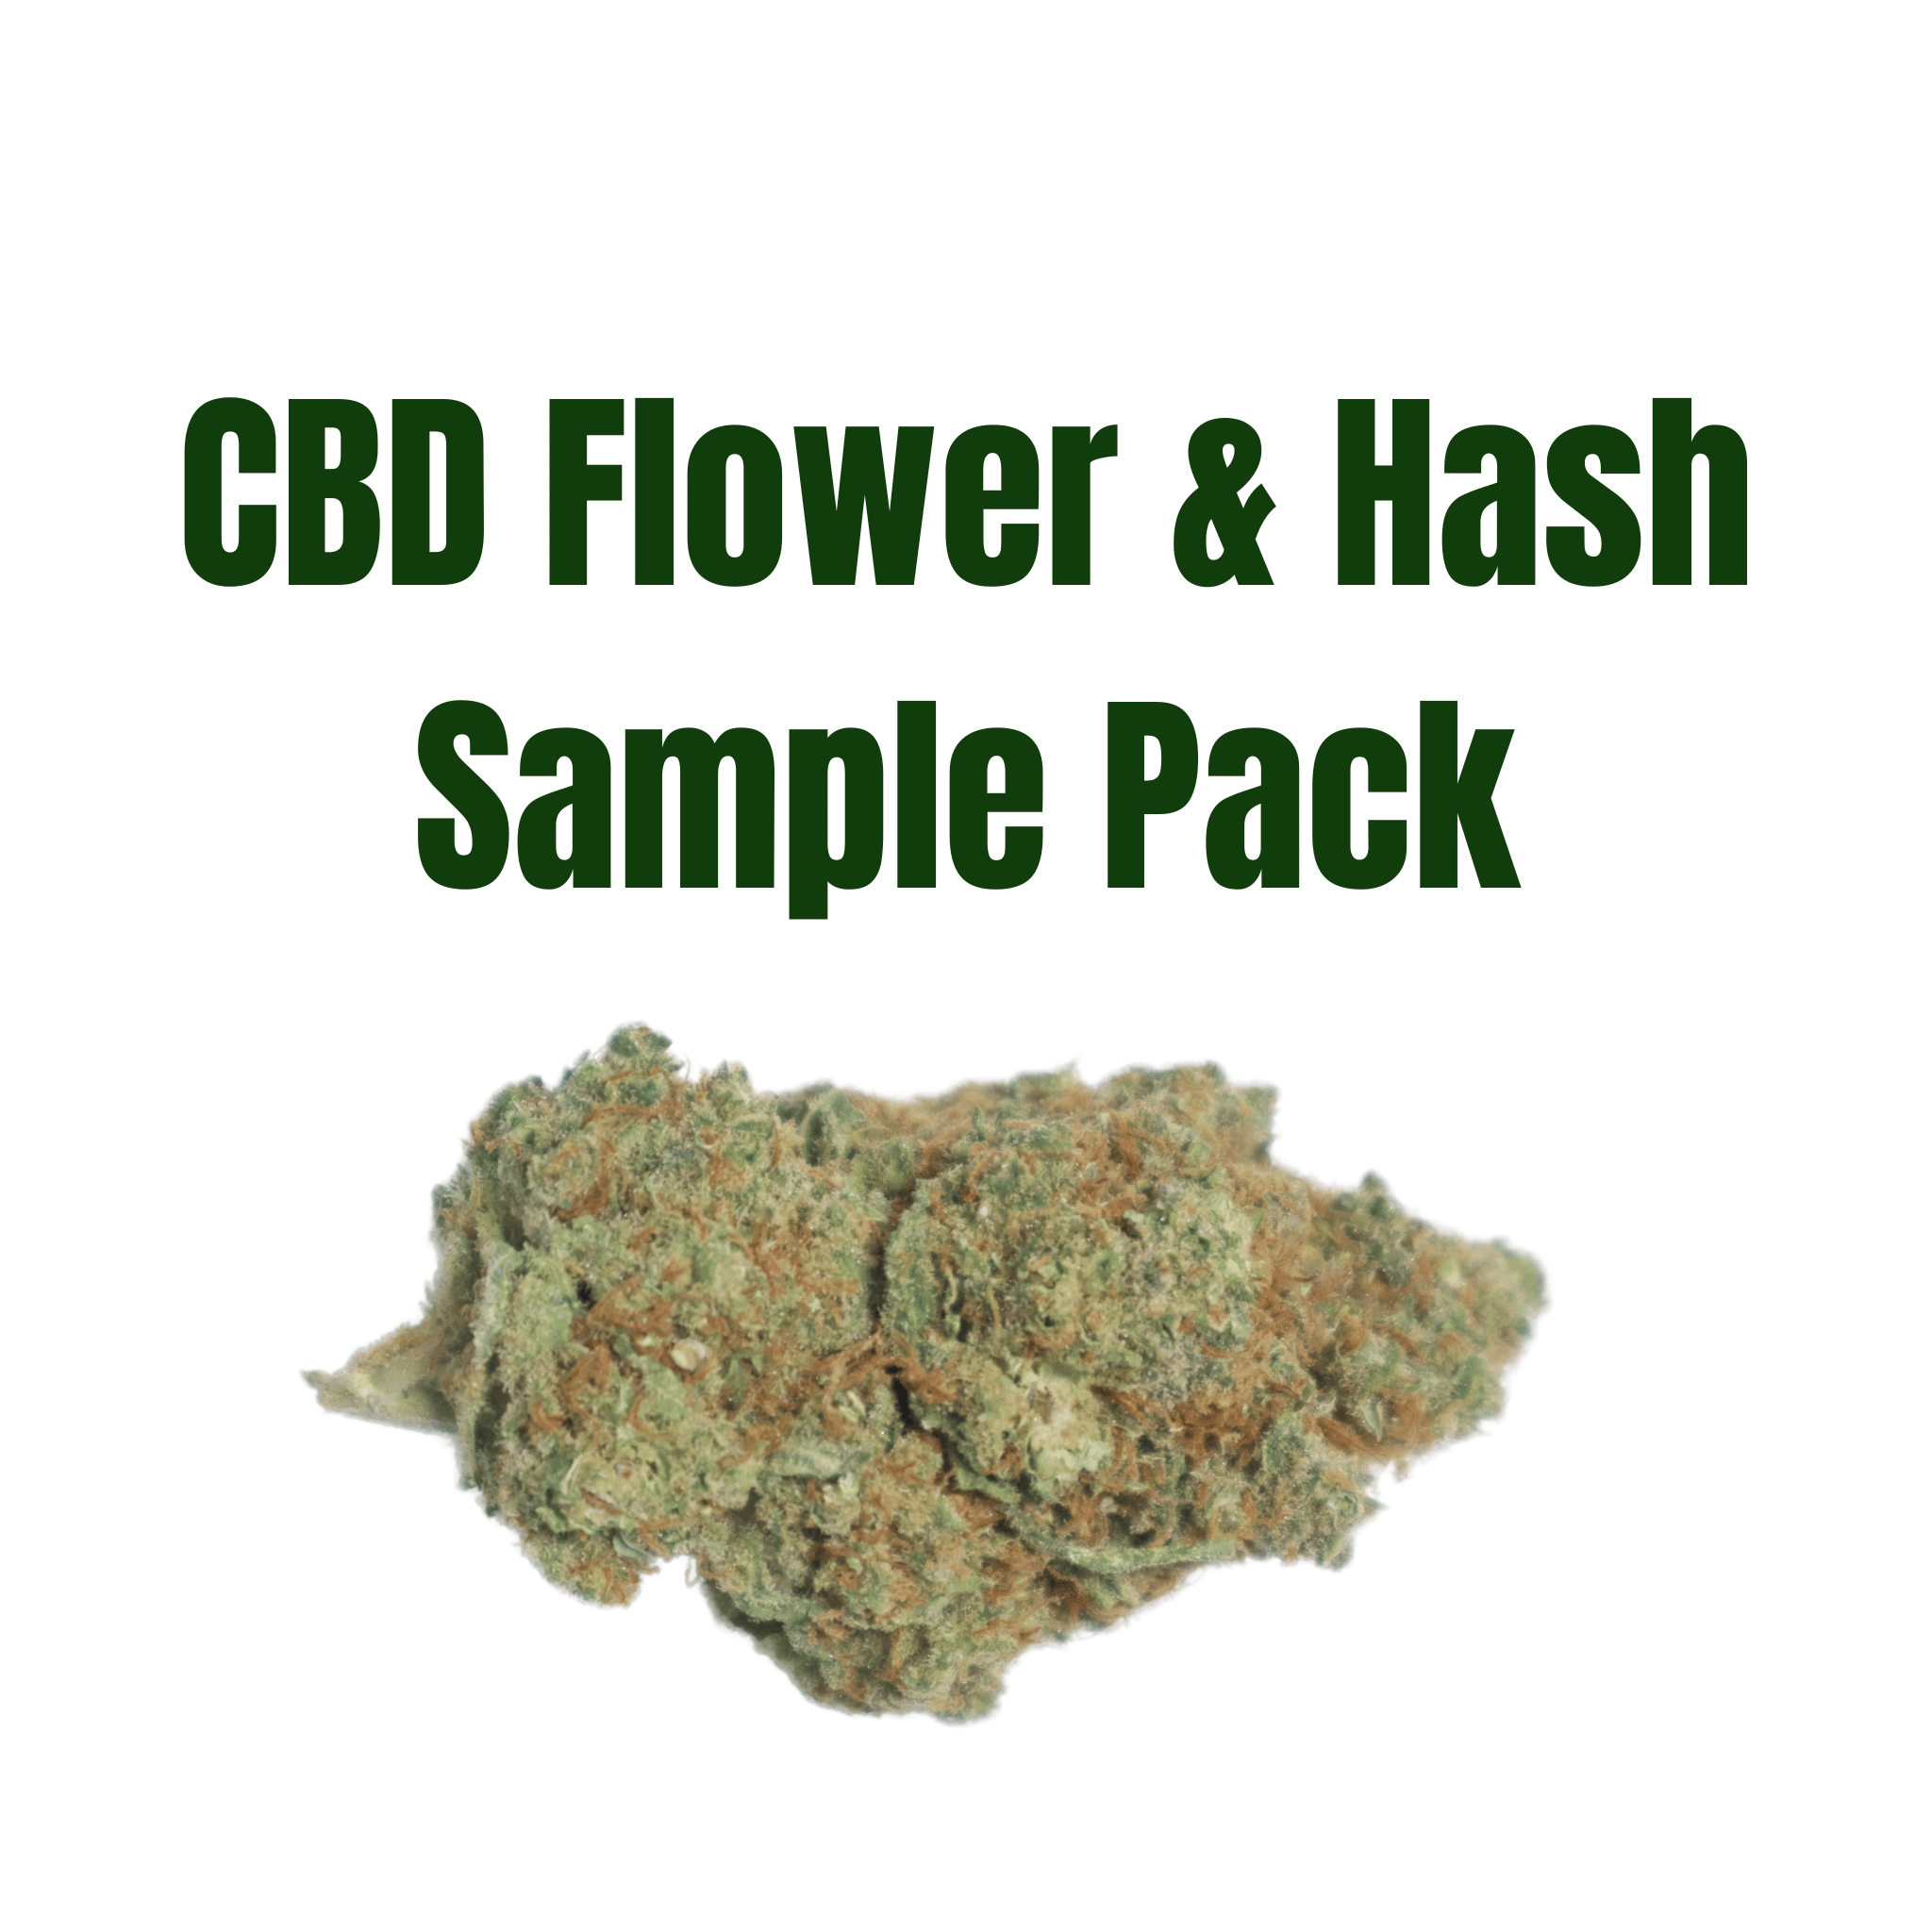 Wholesale CBD Flower & Hash Sample Pack